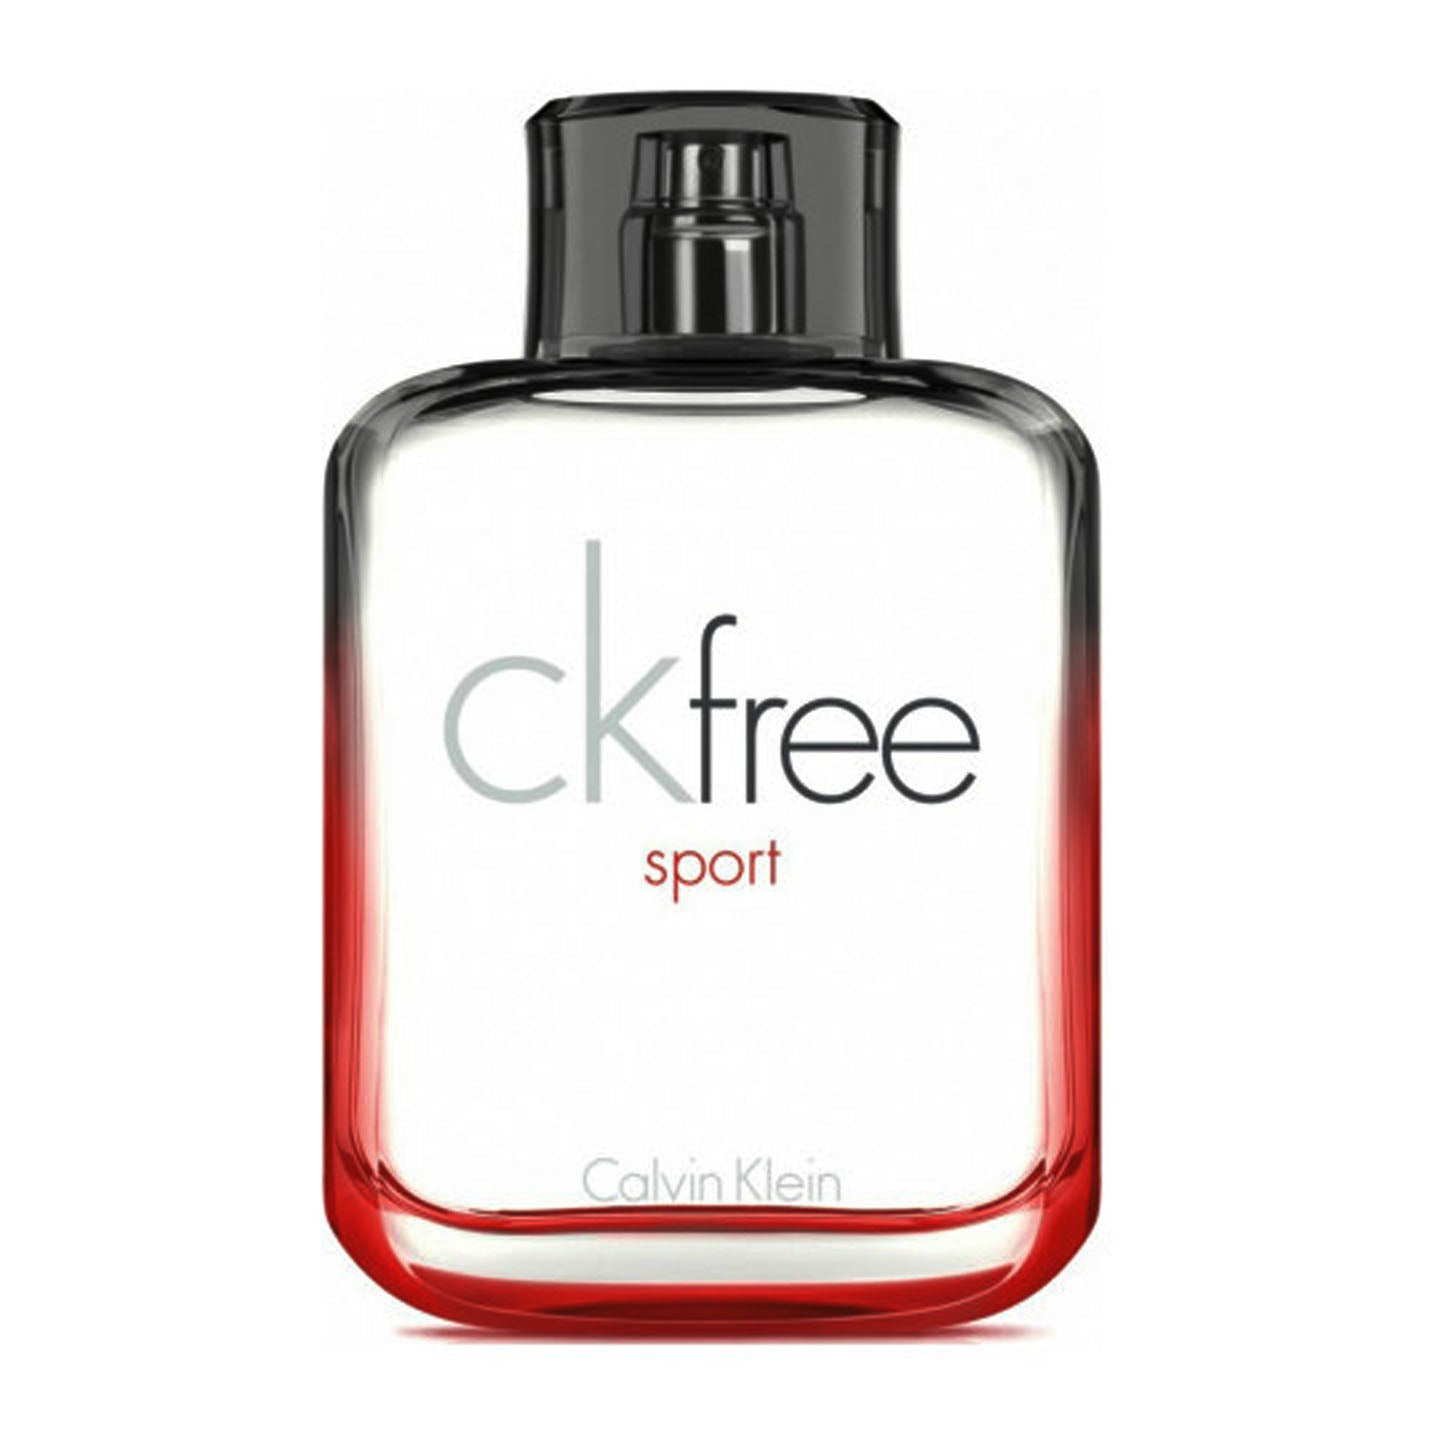 Calvin Klein CK Free Sport Eau de Toilette Spray 50 ml for Men